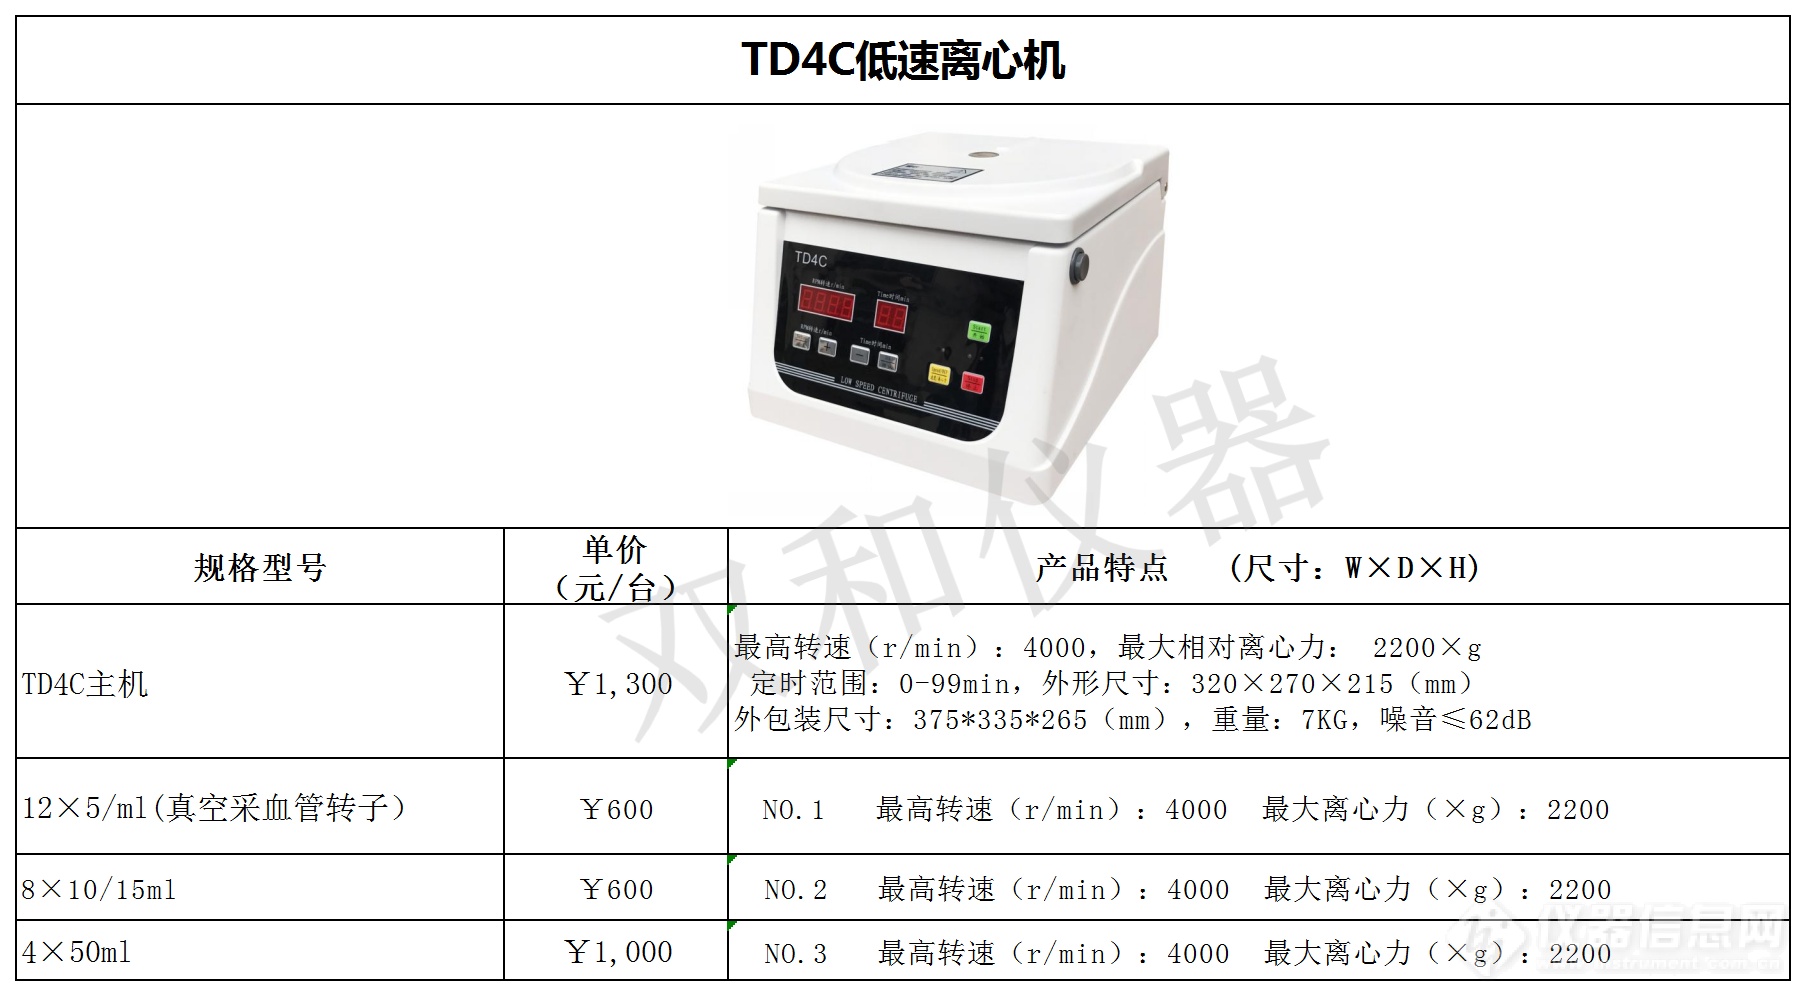 TD4C产品图片详情.png